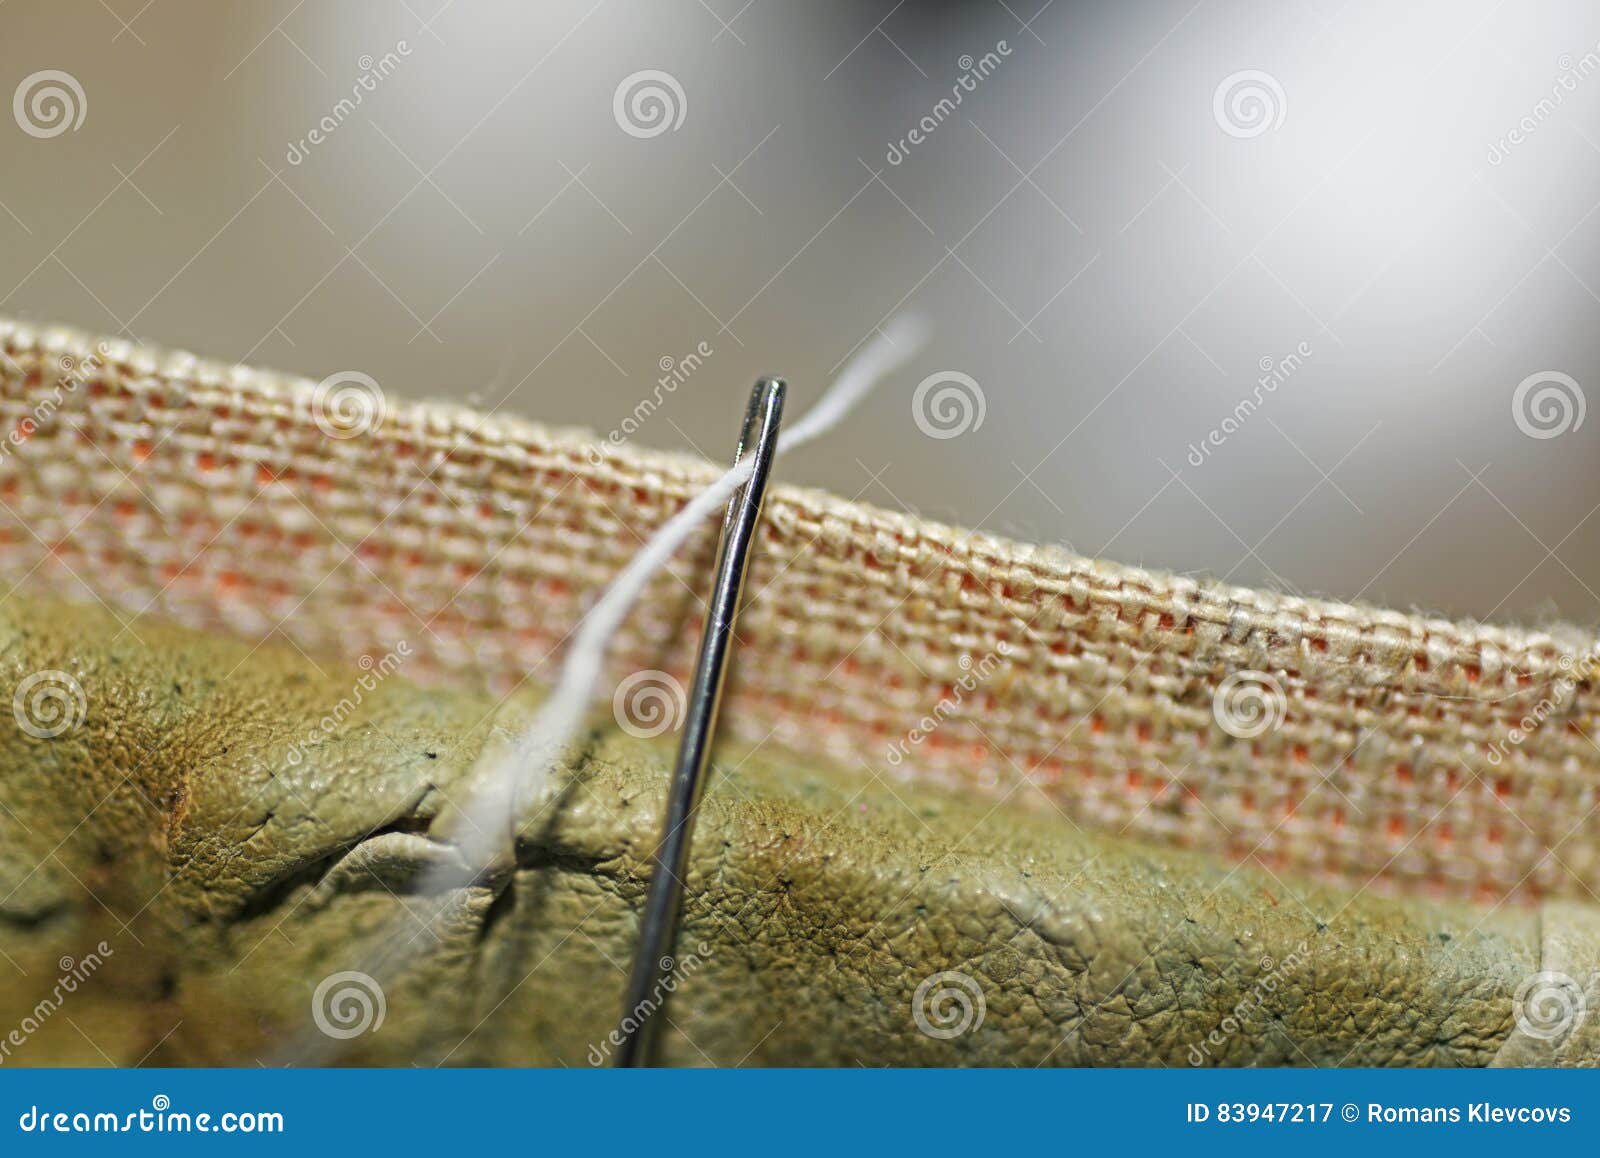 Threading a needle thread. stock image. Image of design - 83947217